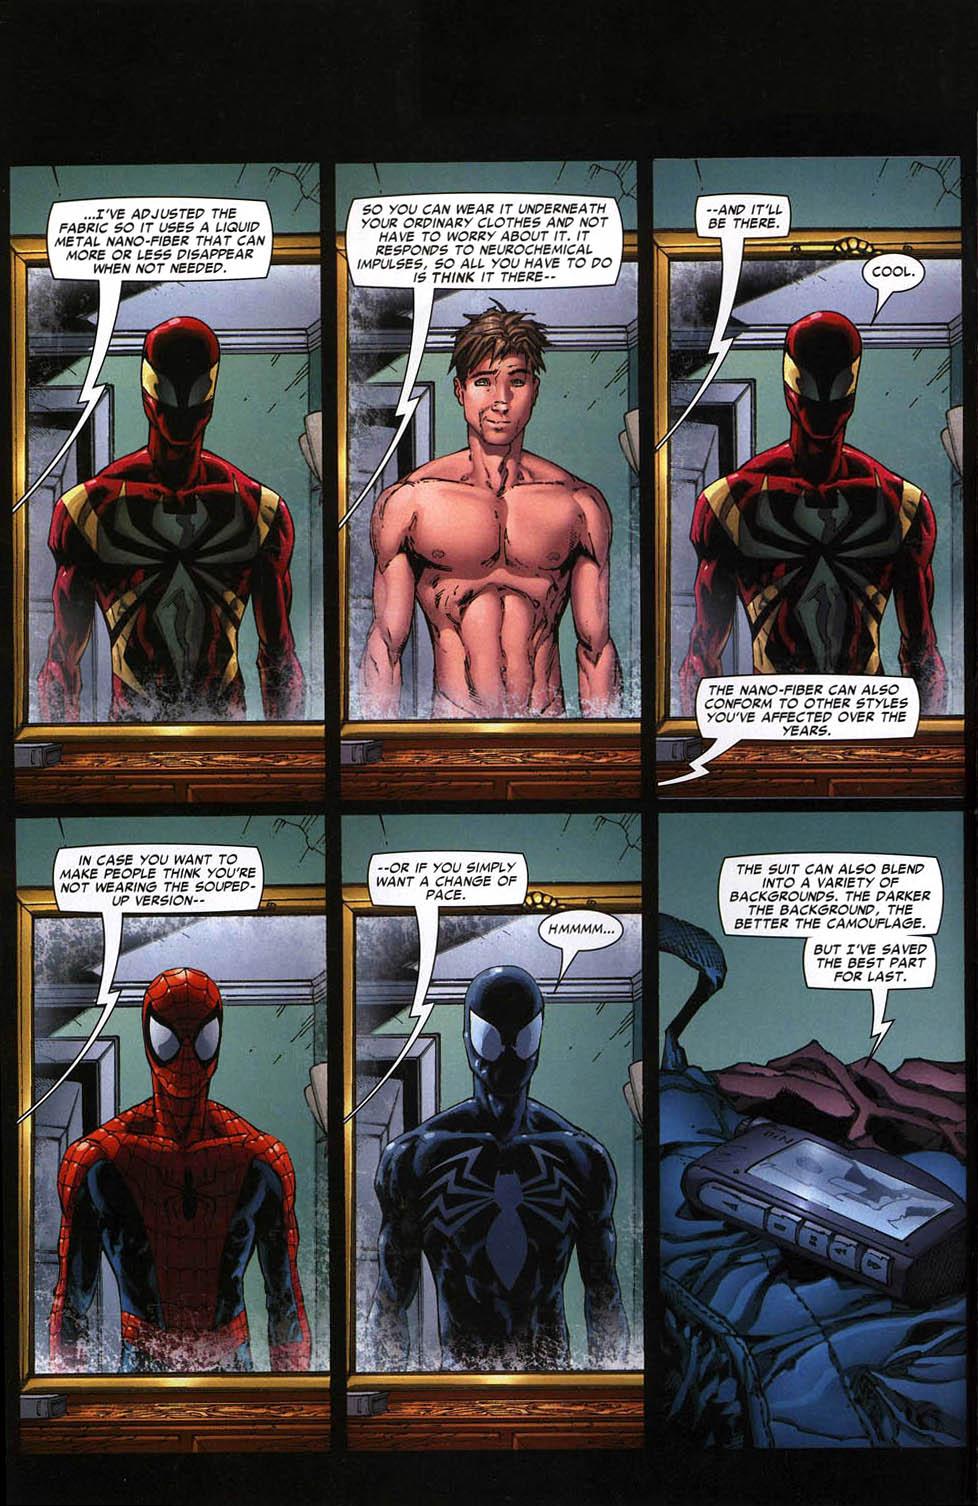 Amazing Spider-Man Civil War review